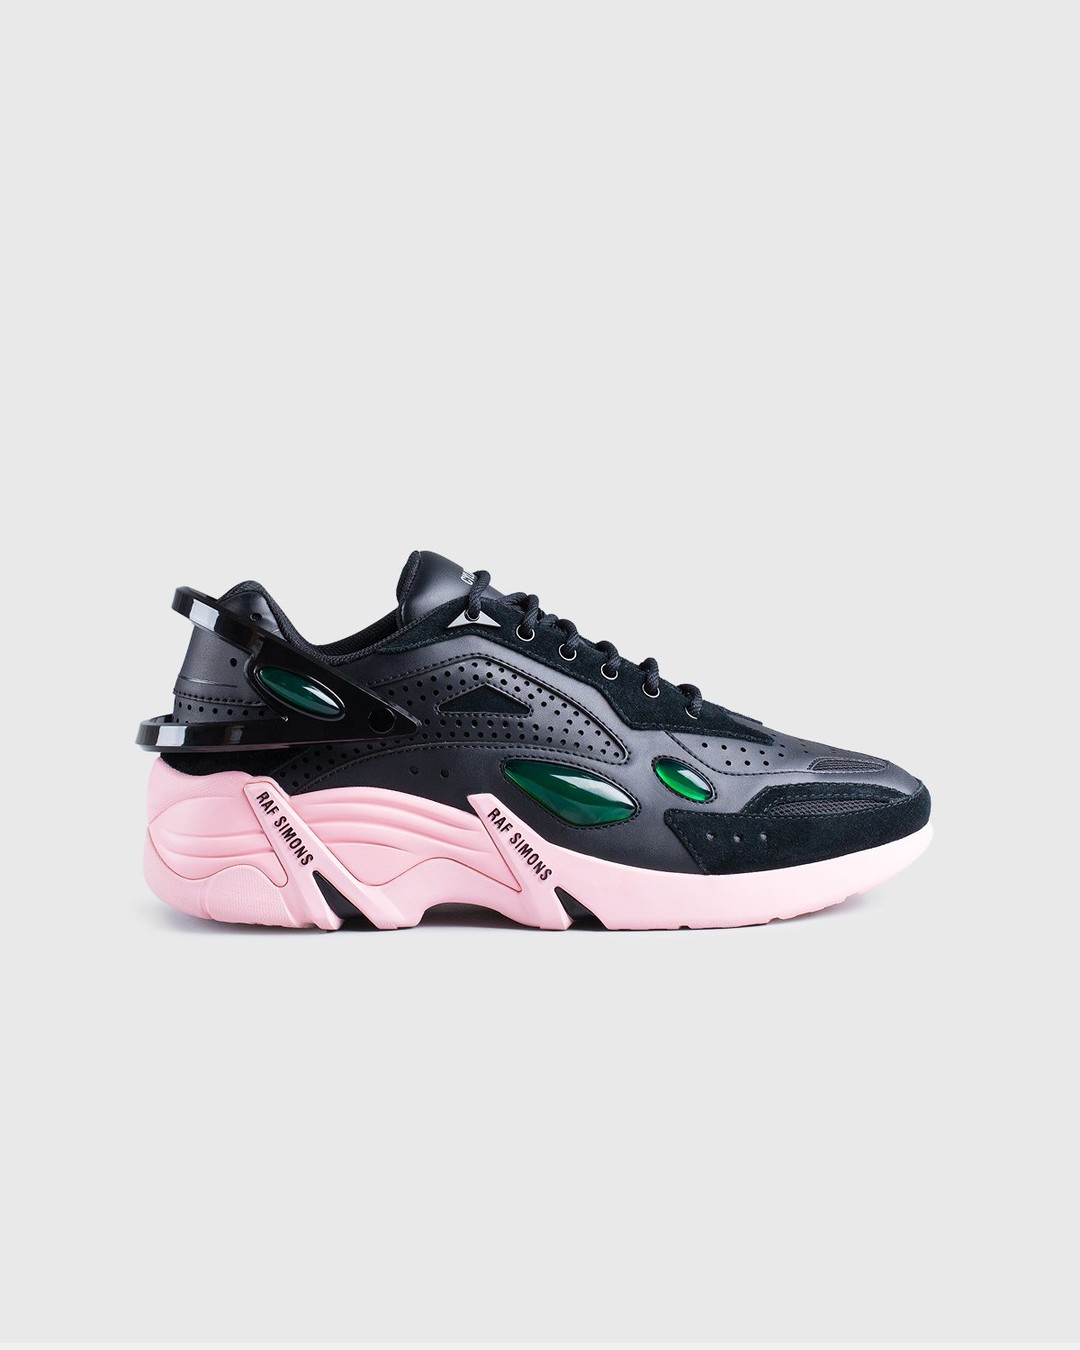 Raf Simons – Cylon Black/Pink - Low Top Sneakers - Black - Image 1